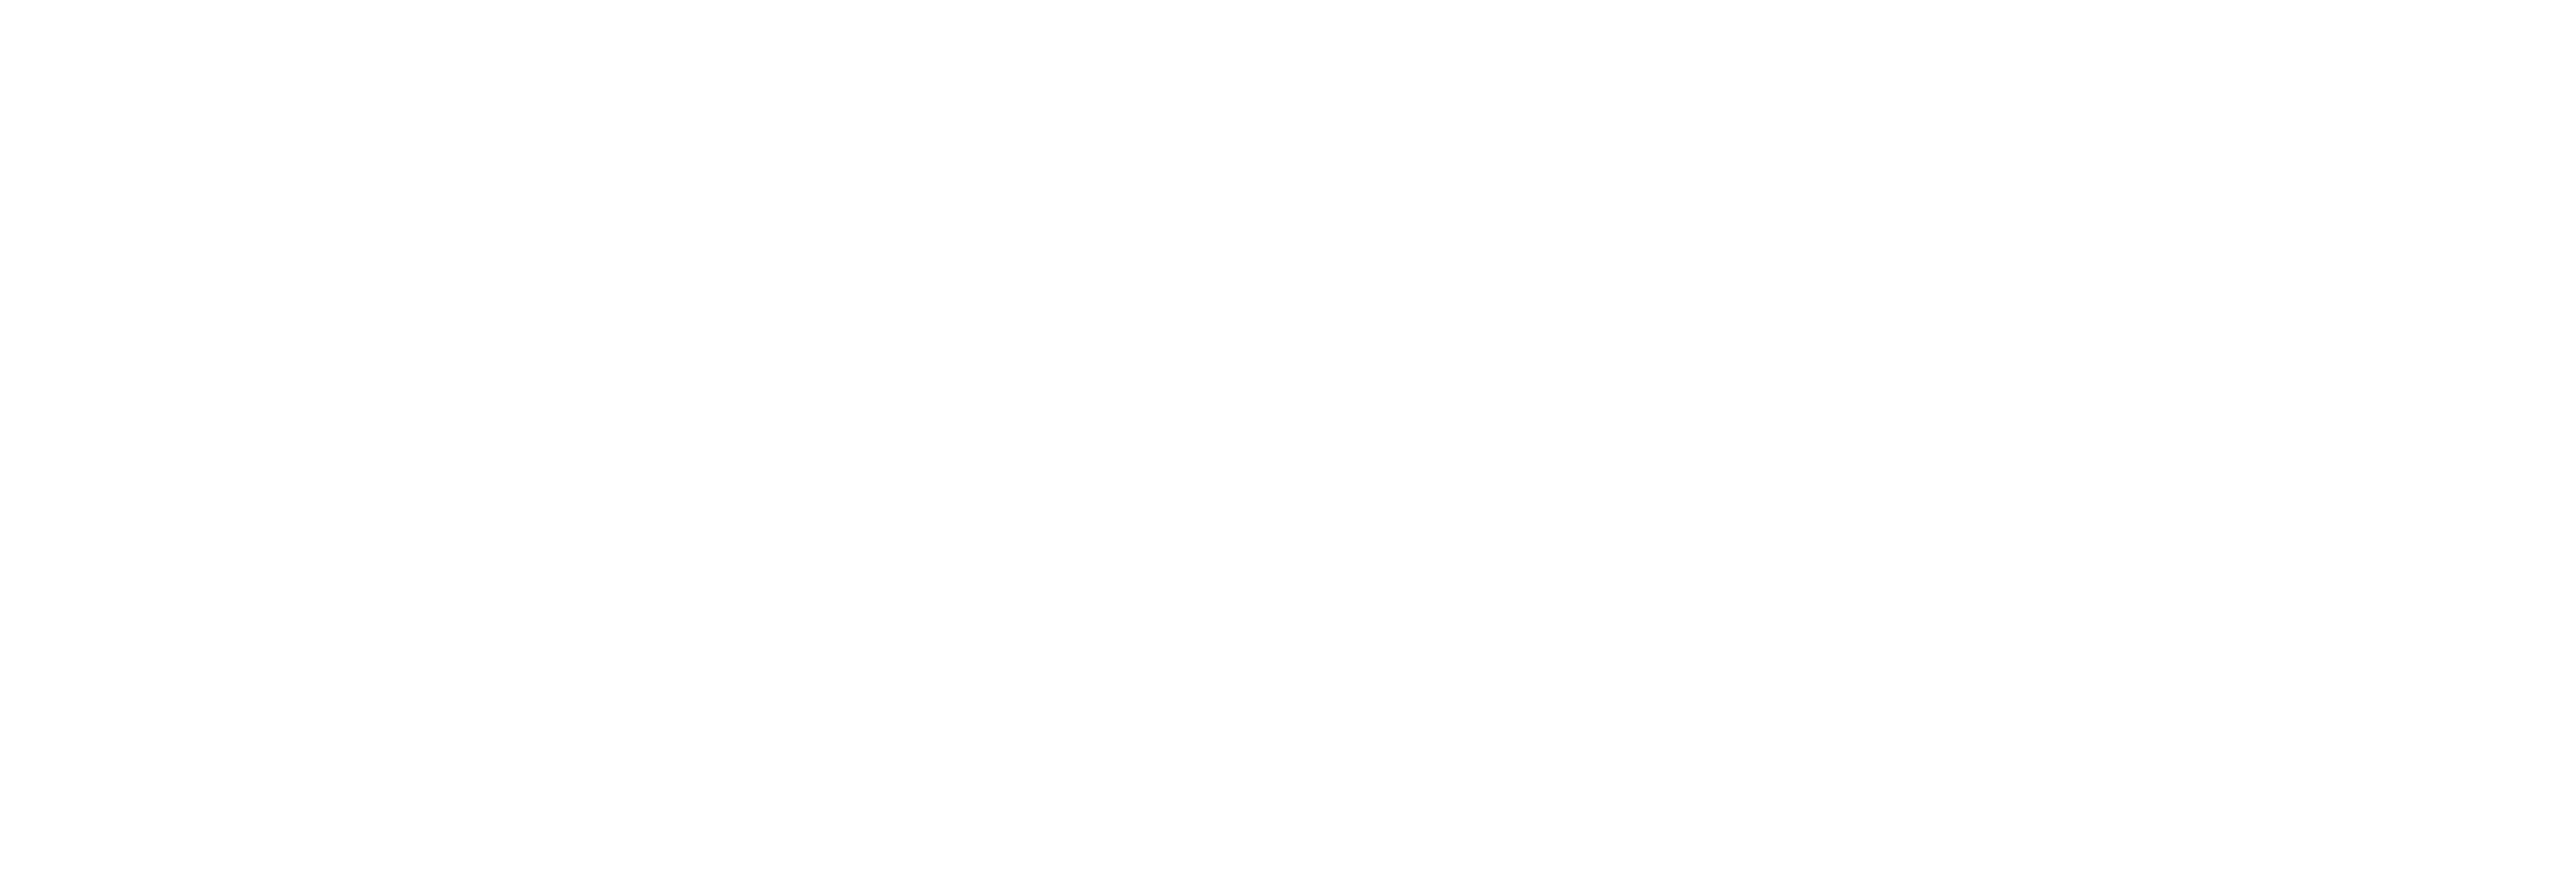 logo htx phianam-01